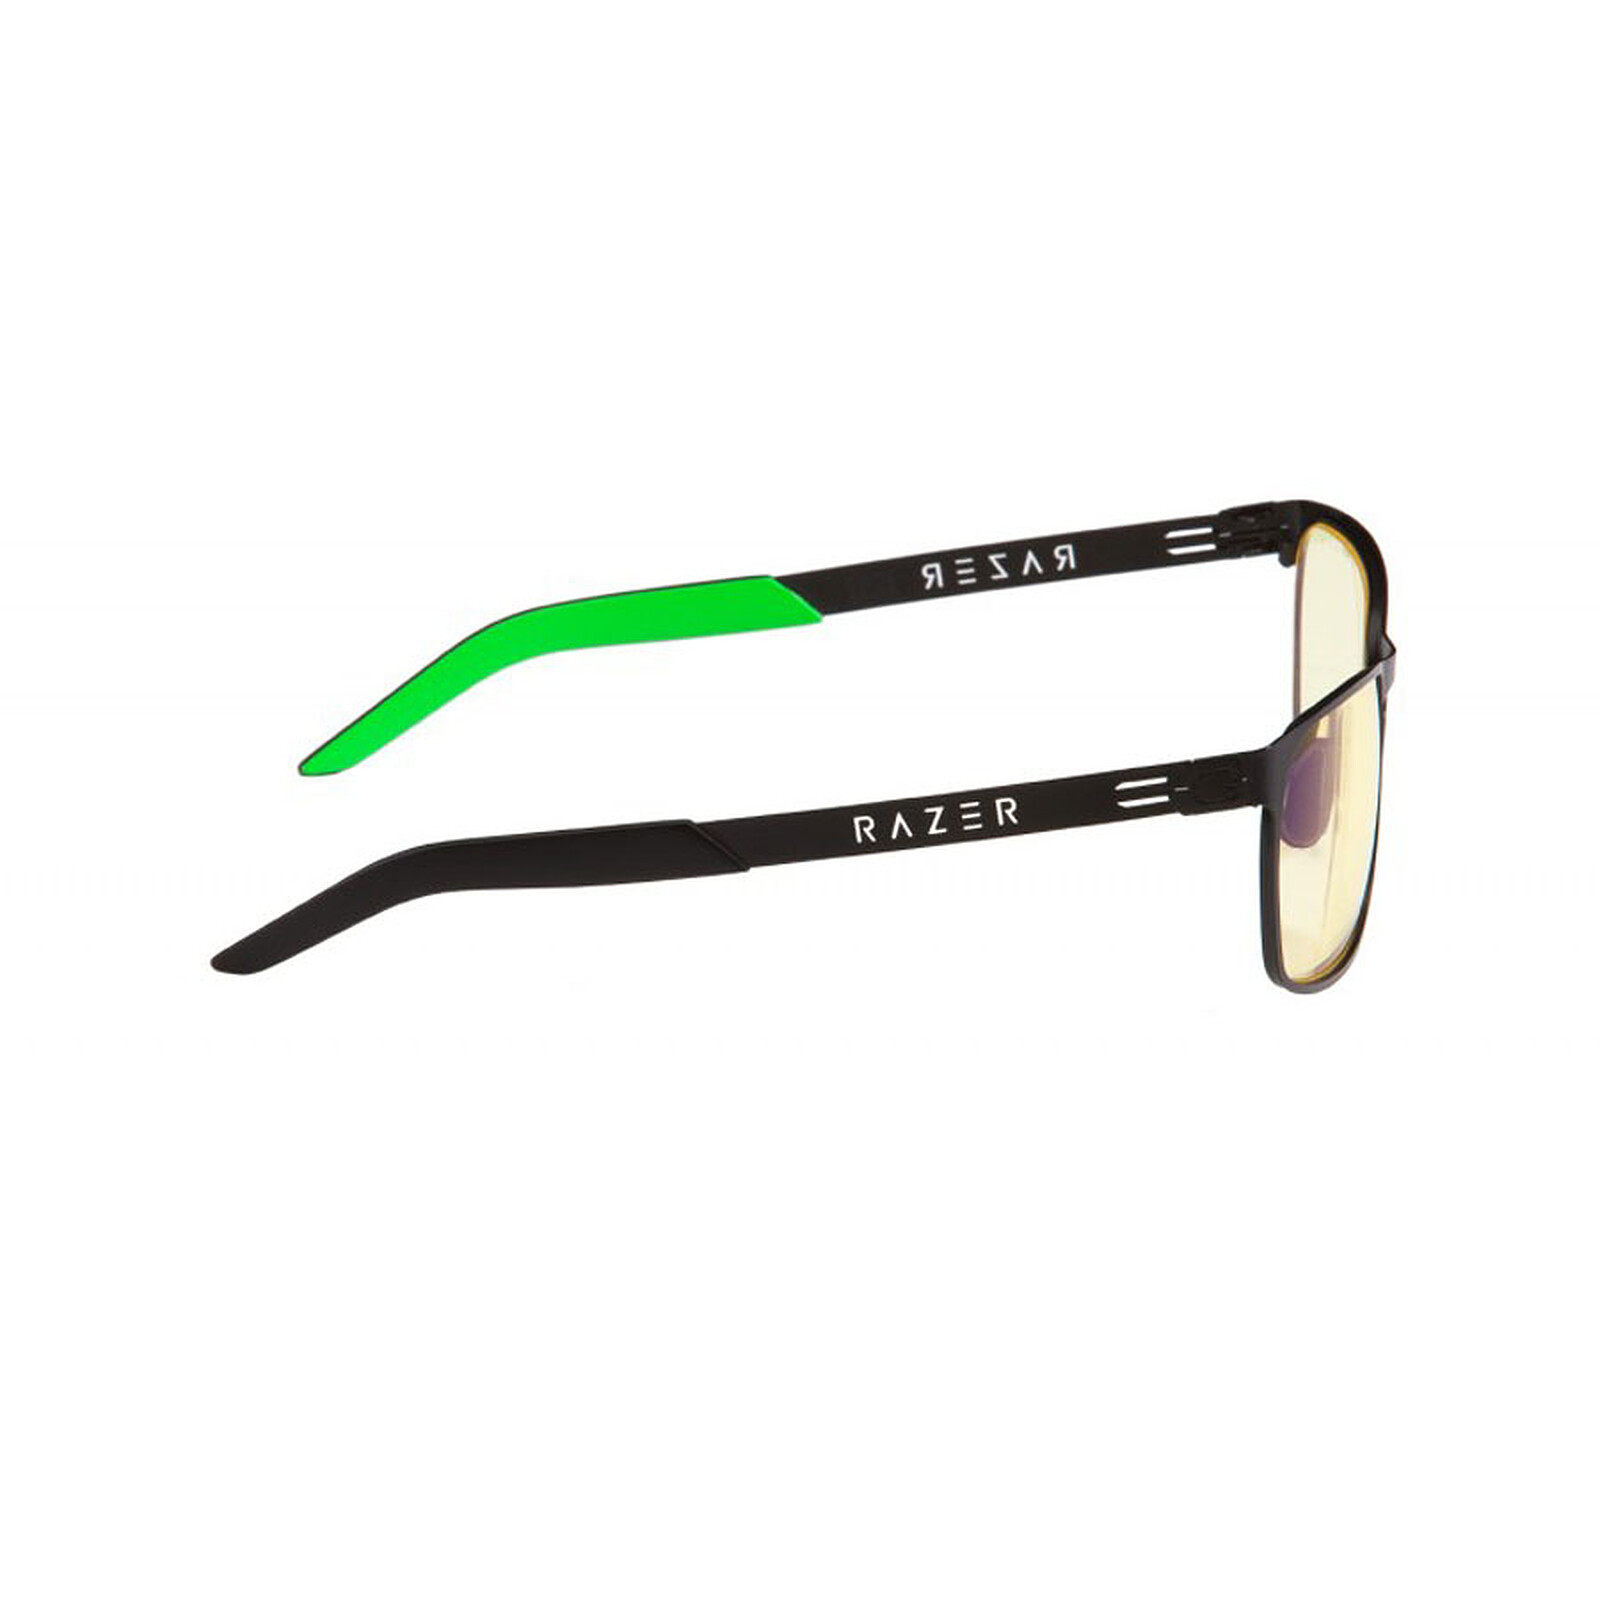 GUNNAR FPS designed by Razer - Computer glasses - LDLC 3-year warranty